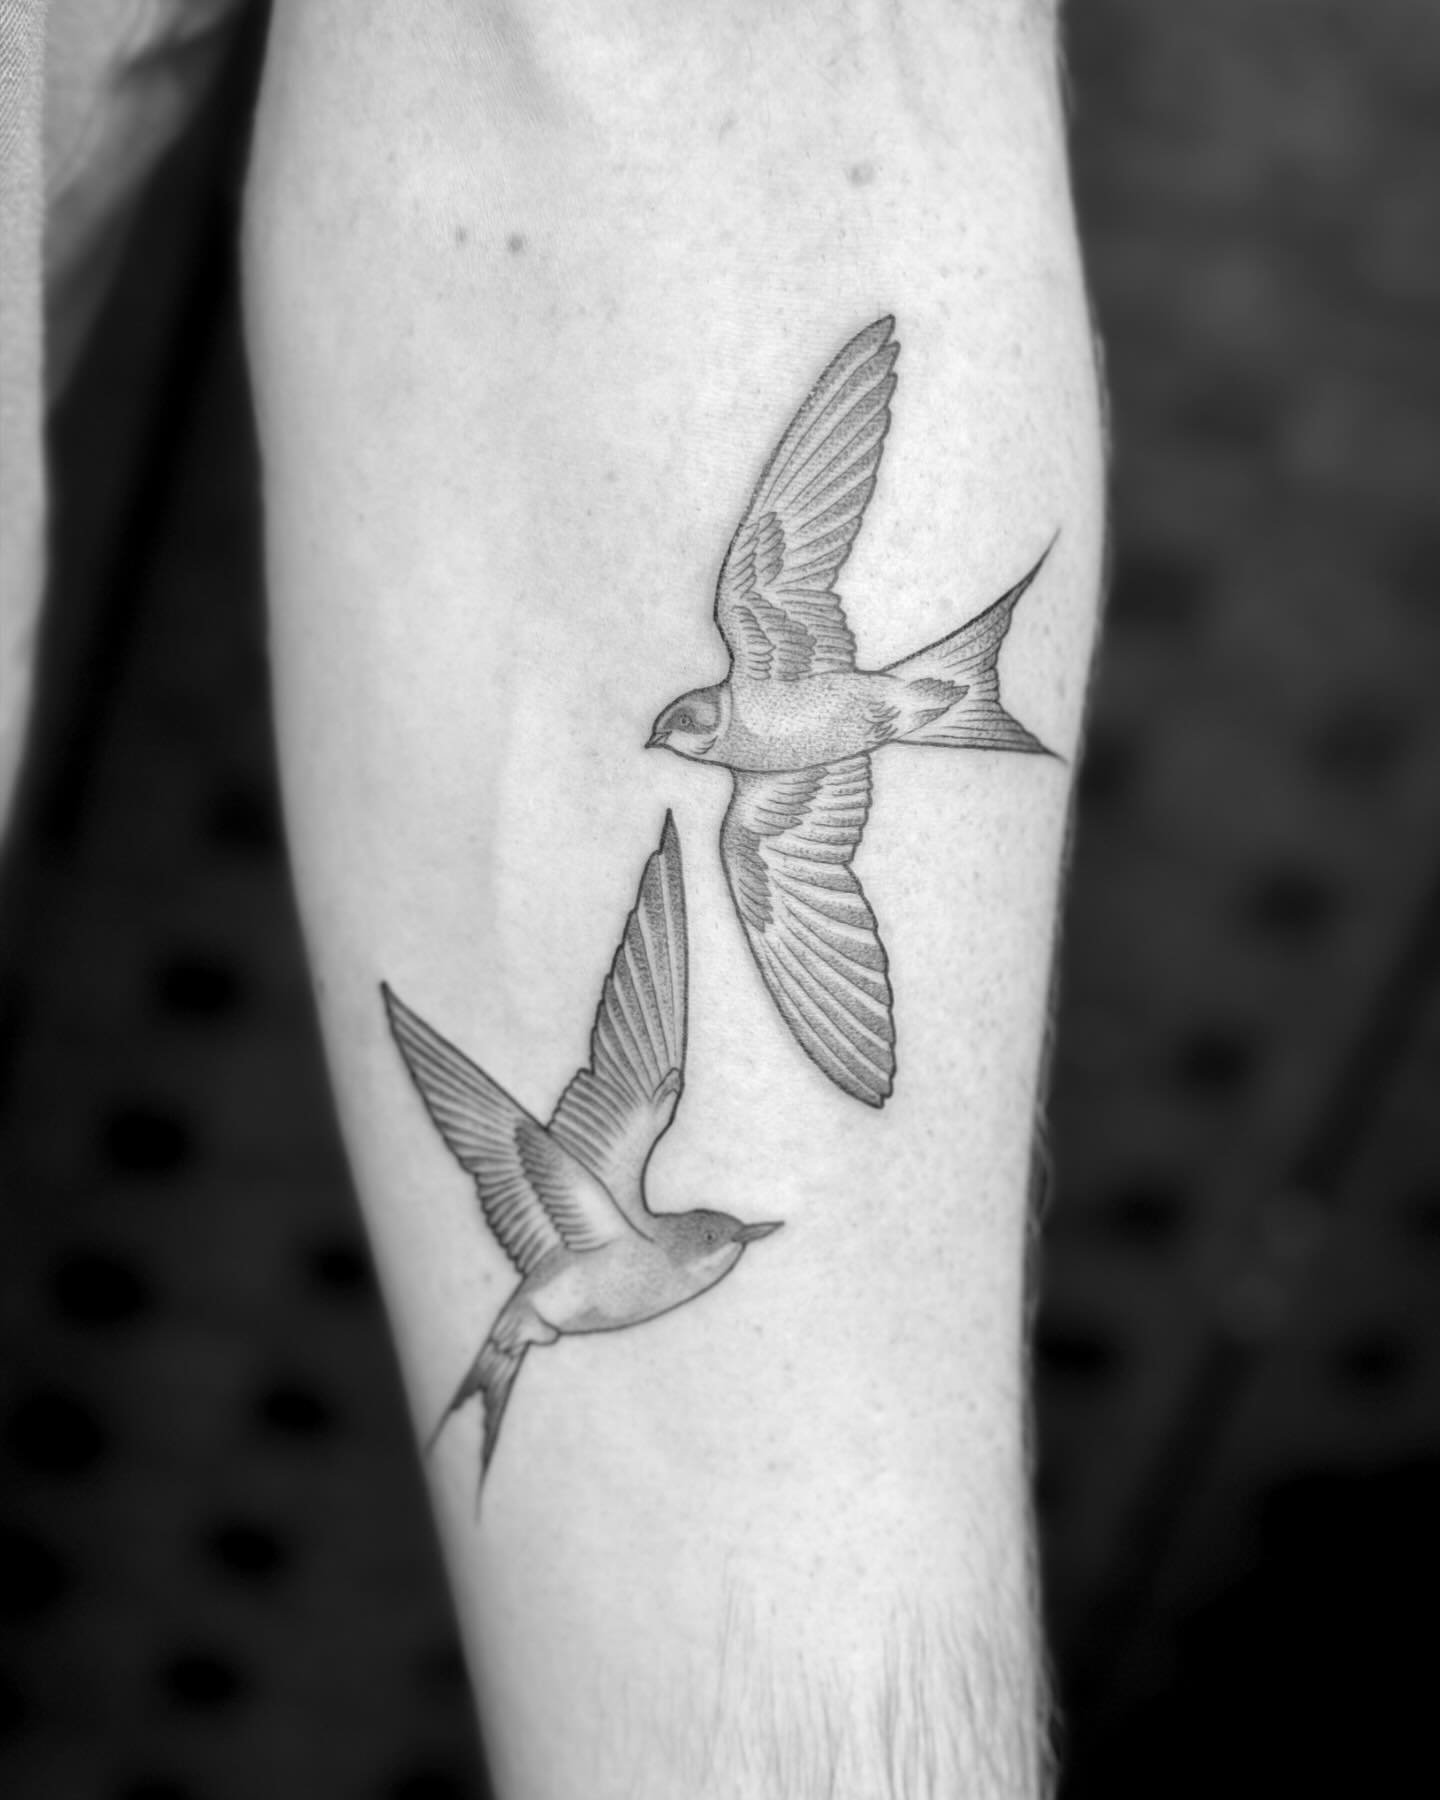 A pair of dotwork Swallows for @nate_dogg9797 🤘
.
.
.
.
#dot #dotwork #dotworktattoo #tattooideas #swallowtattoo #tatt #finelinetattoo #blxckworktattoo #artist #tattoos #tattooist #tattoosofinstagram